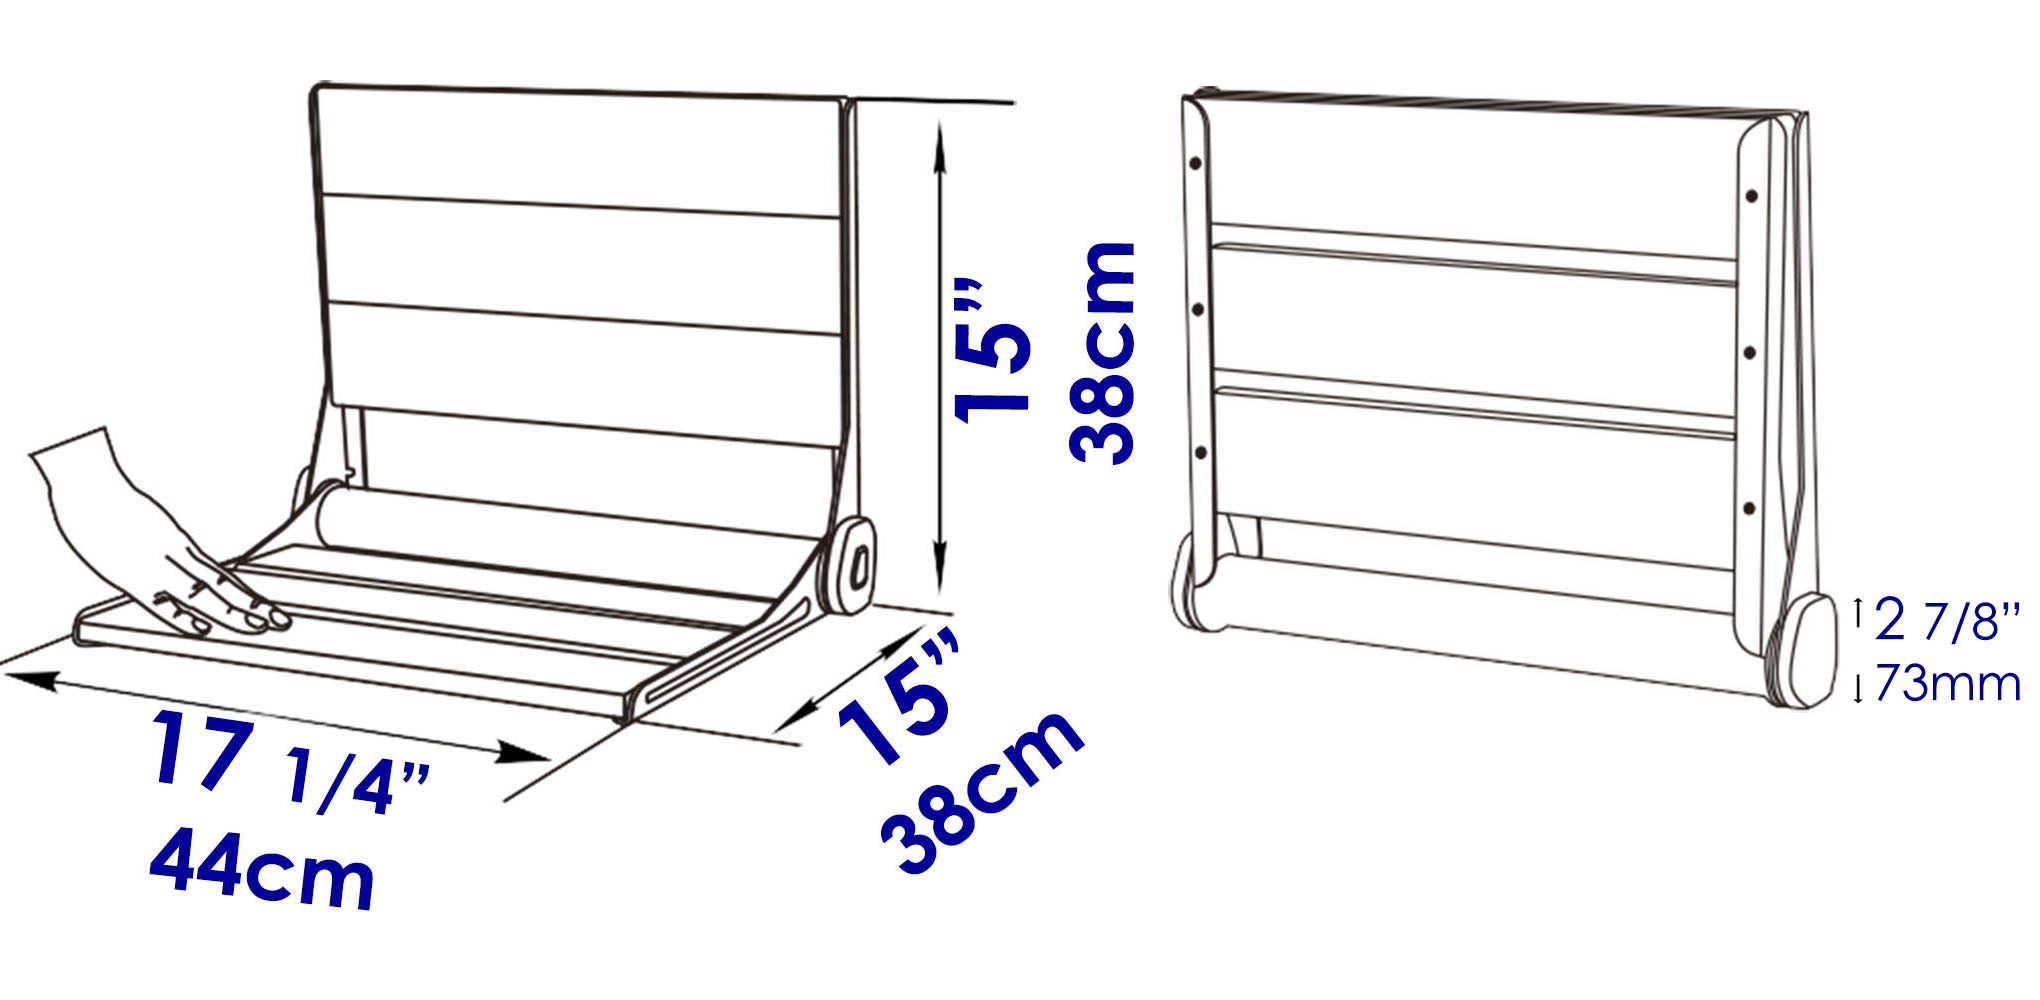 Alfi Brand ABS17 17" Folding Teak Wood Shower Seat Bench with Backrest-DirectSinks